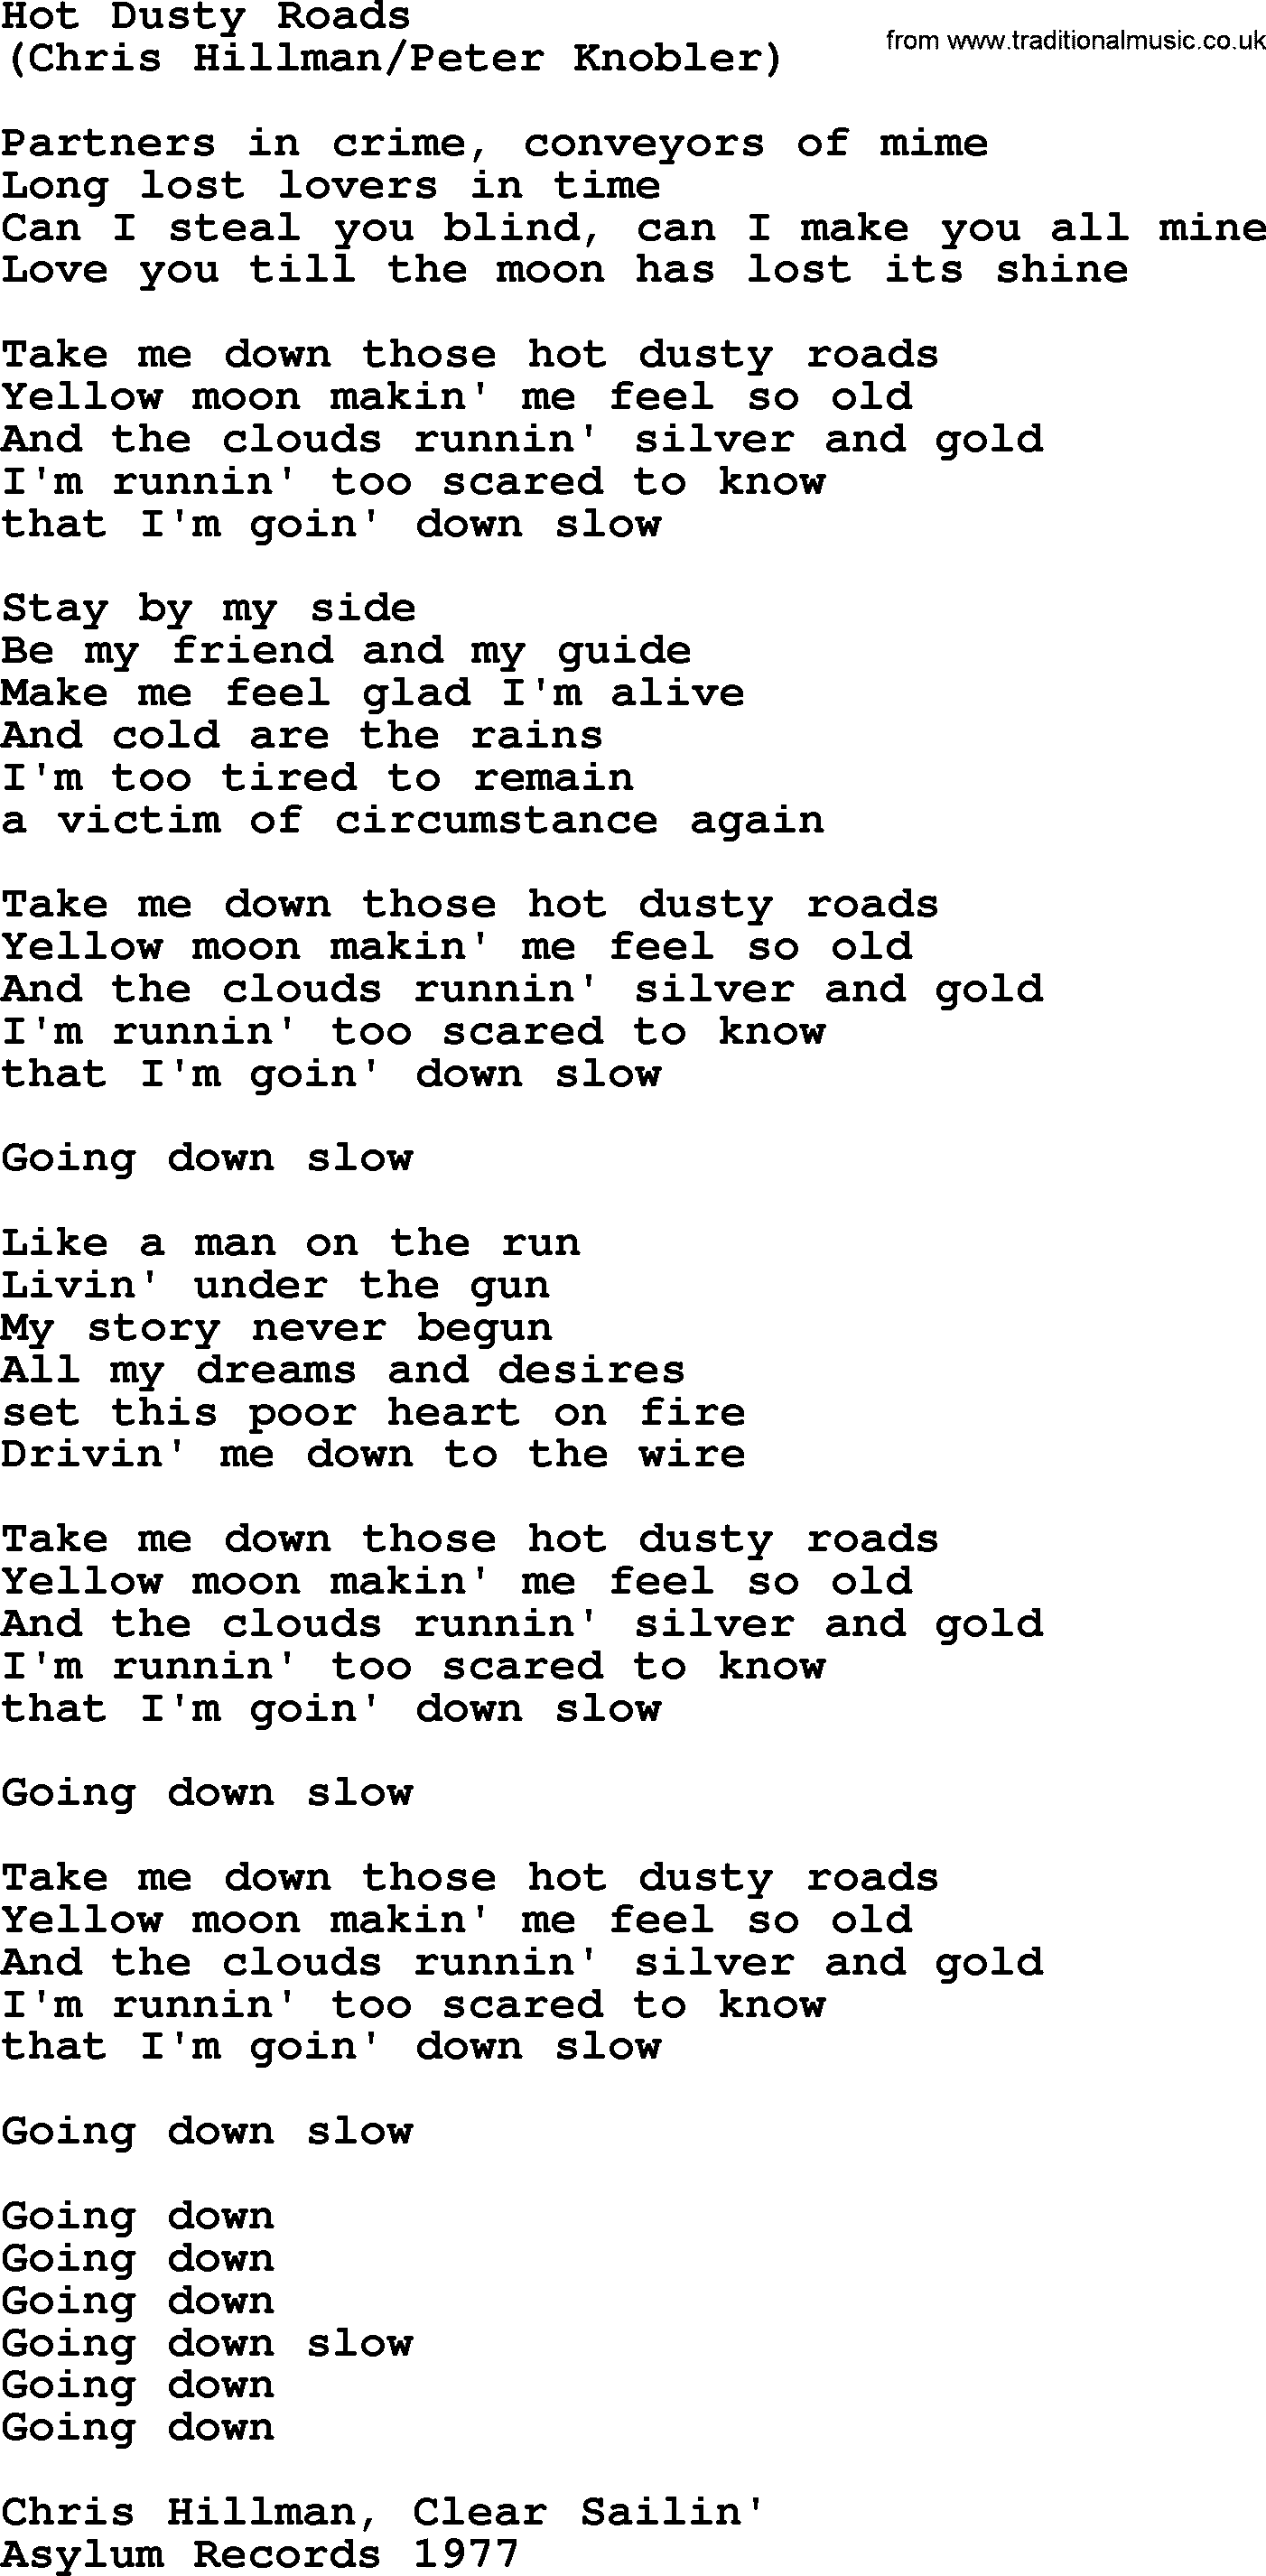 The Byrds song Hot Dusty Roads, lyrics